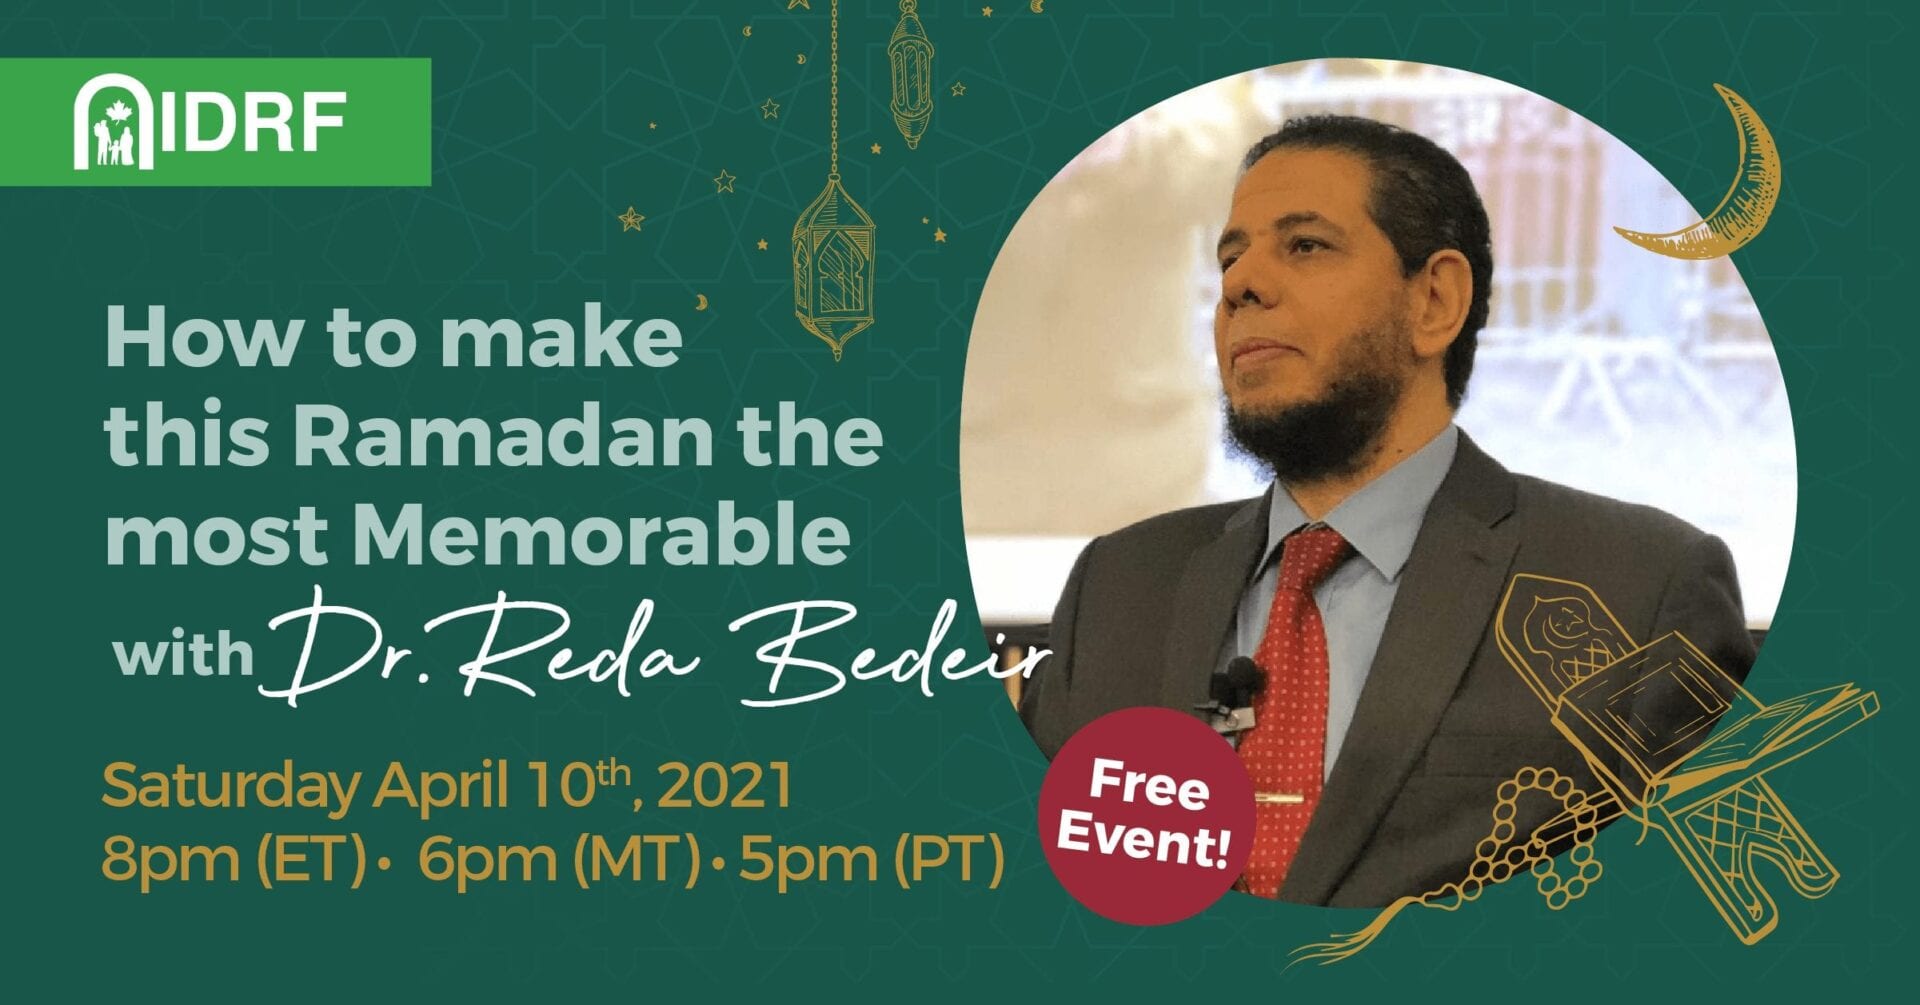 How to make this Ramadan memorable - DR. Reda Bedeir